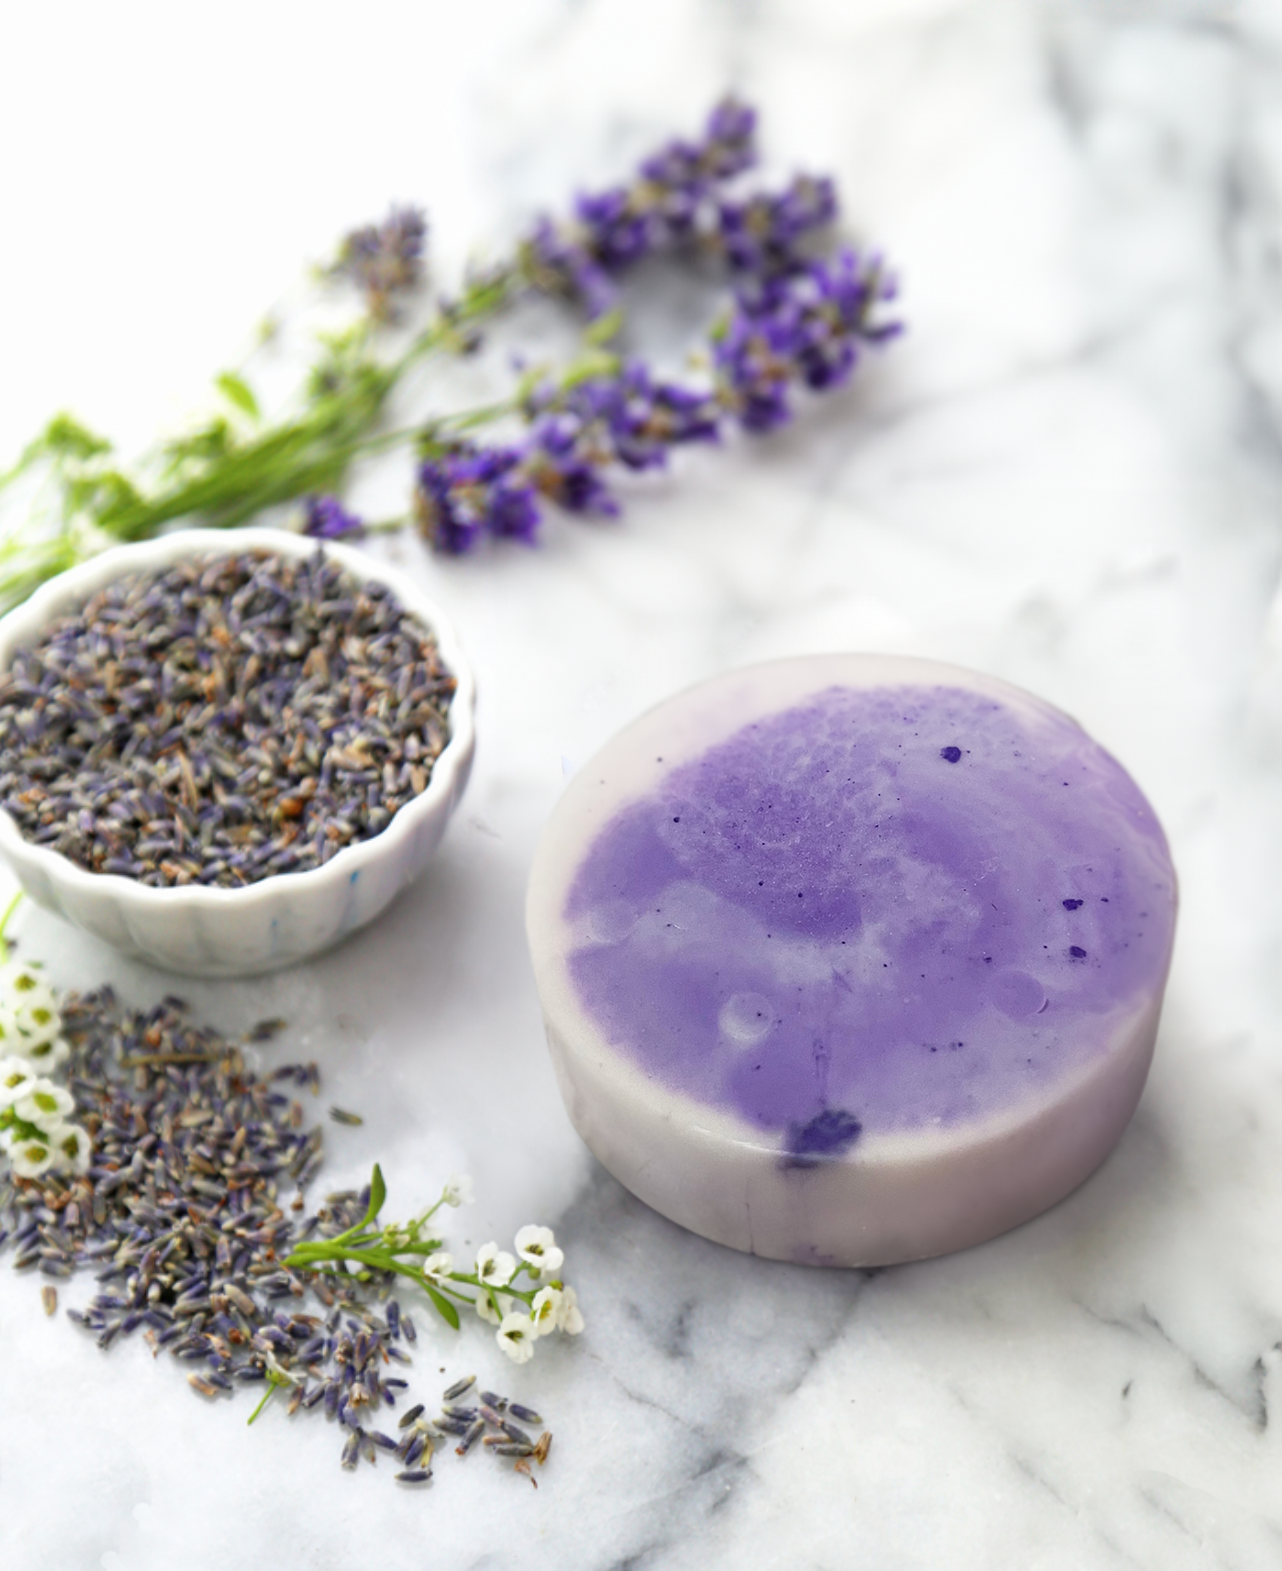 Lavender Shea Soap